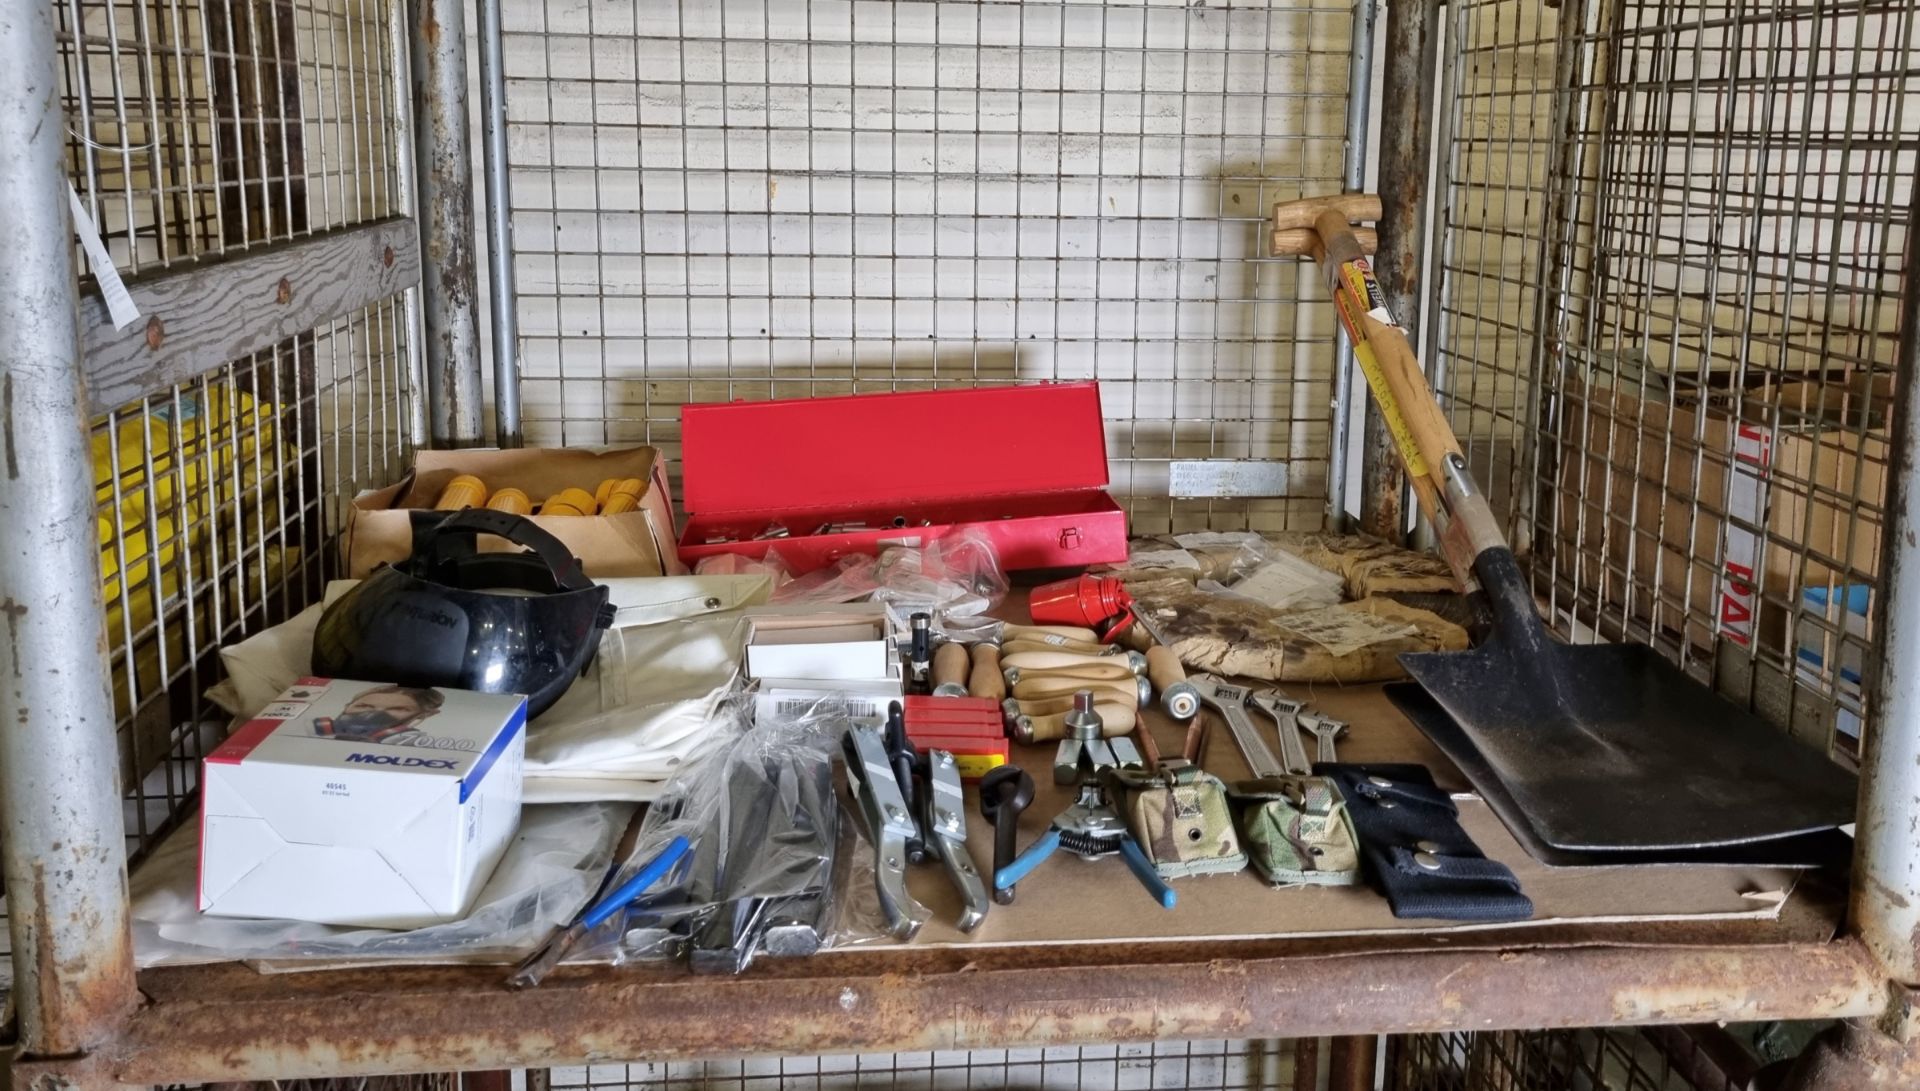 Workshop tools and equipment - shovels, sockets, file handles, adjustable spanners,